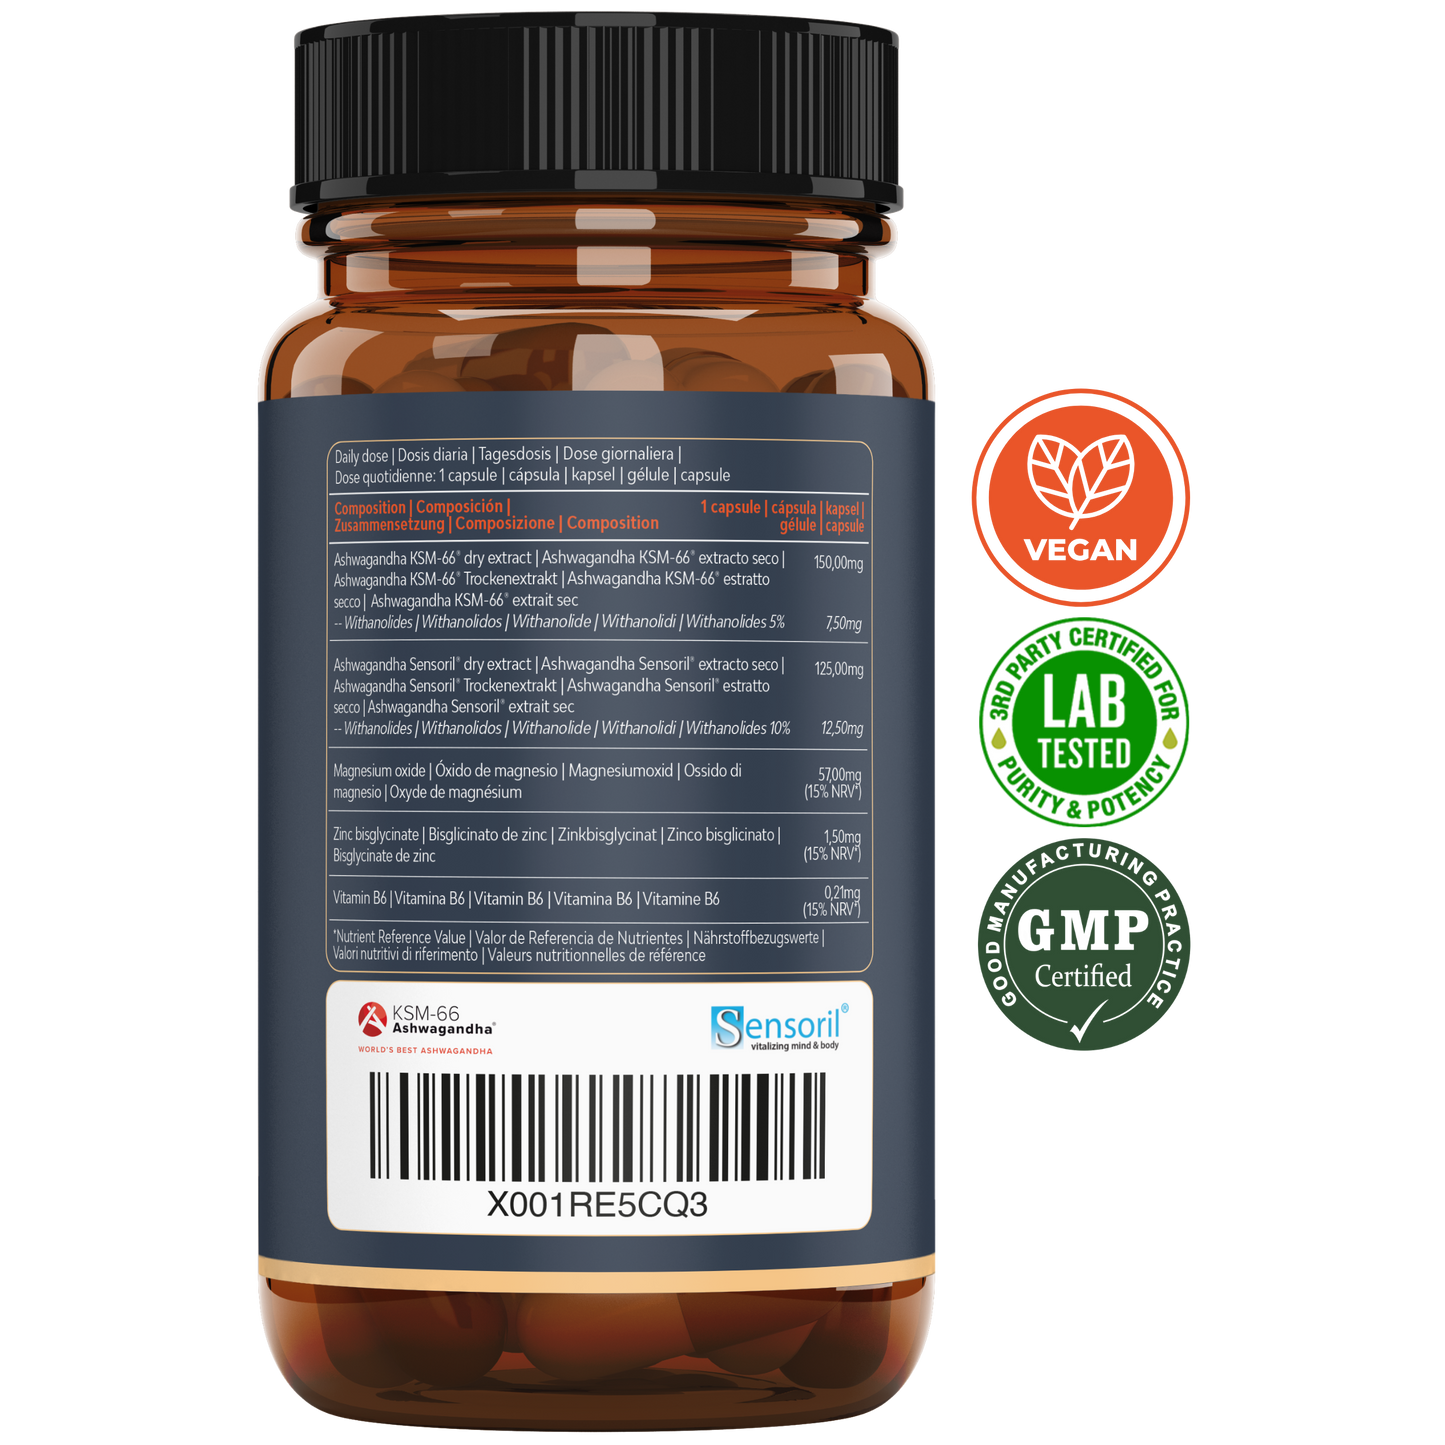 Ashwagandha capsules KSM-66® + Sensoril® | Very High Potency 15% 20mg Withanolides per capsule